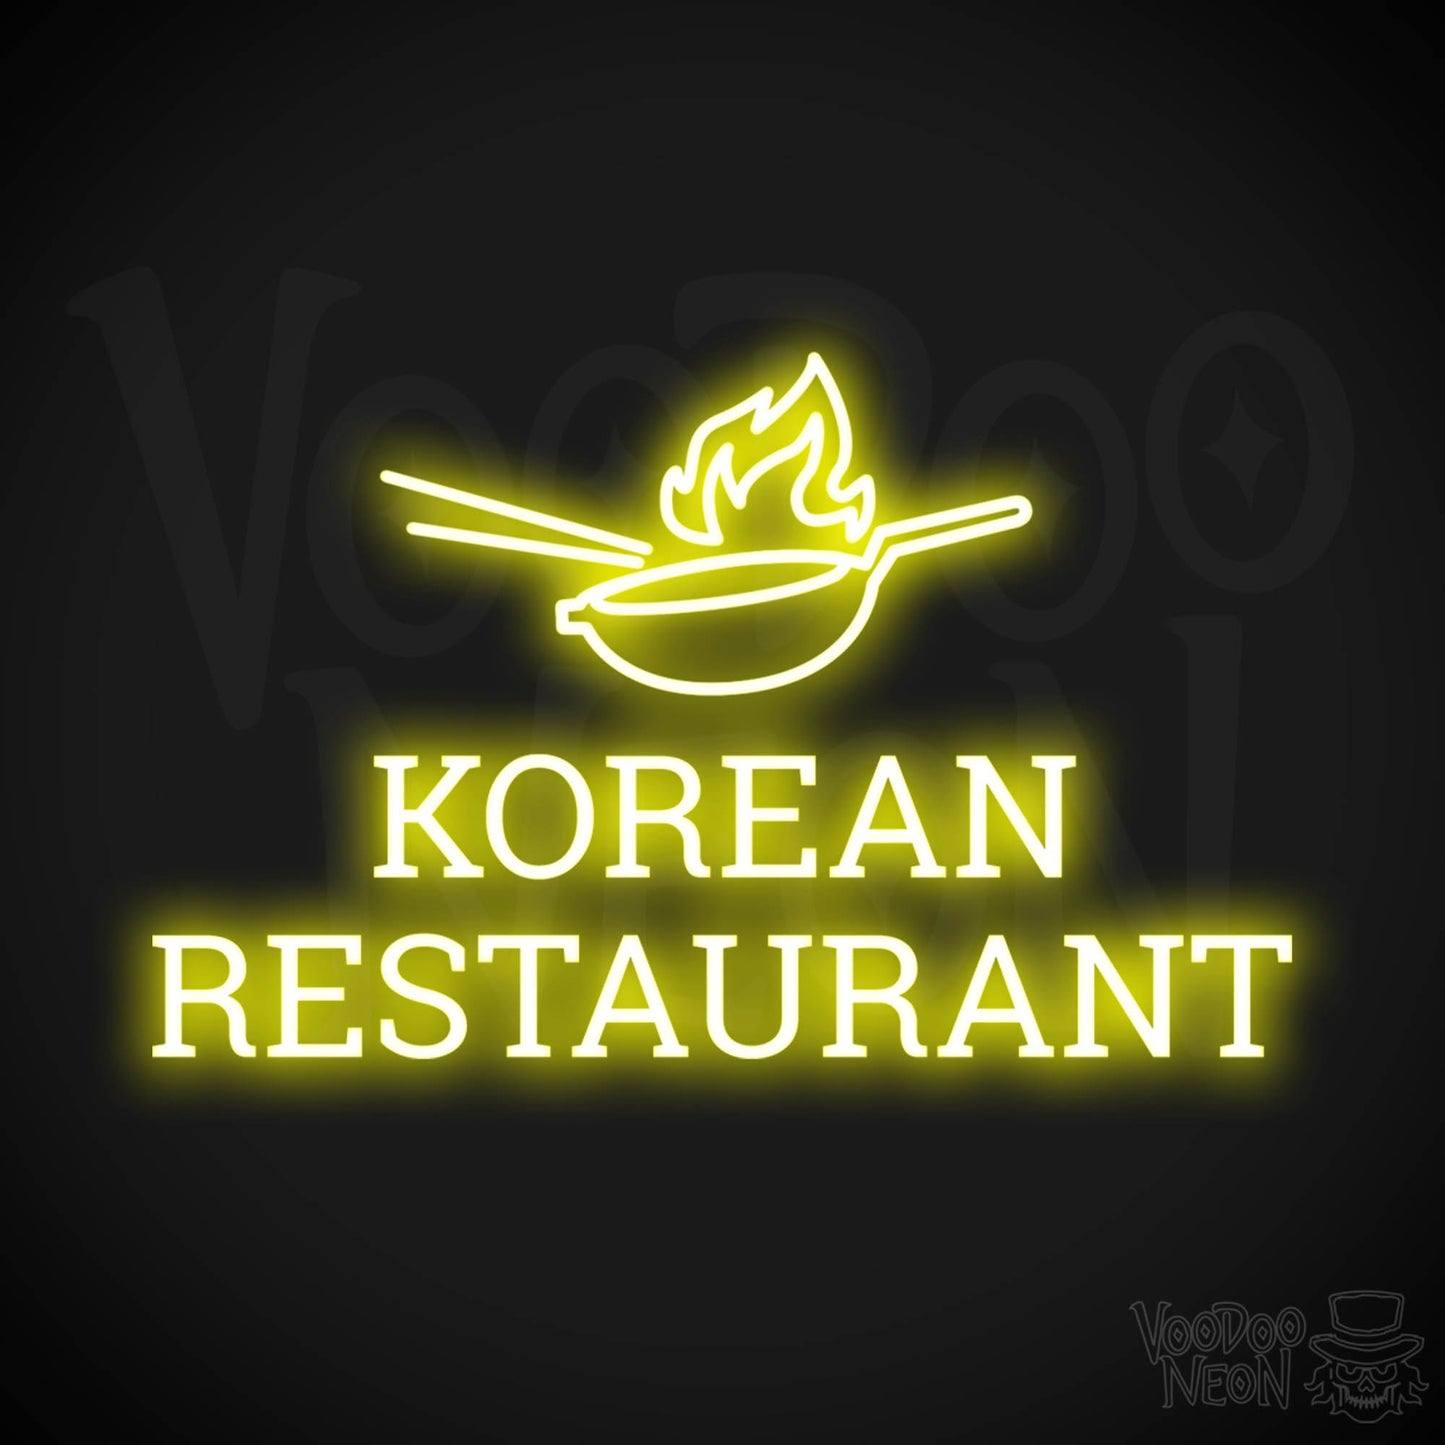 Korean Restaurant LED Neon - Yellow